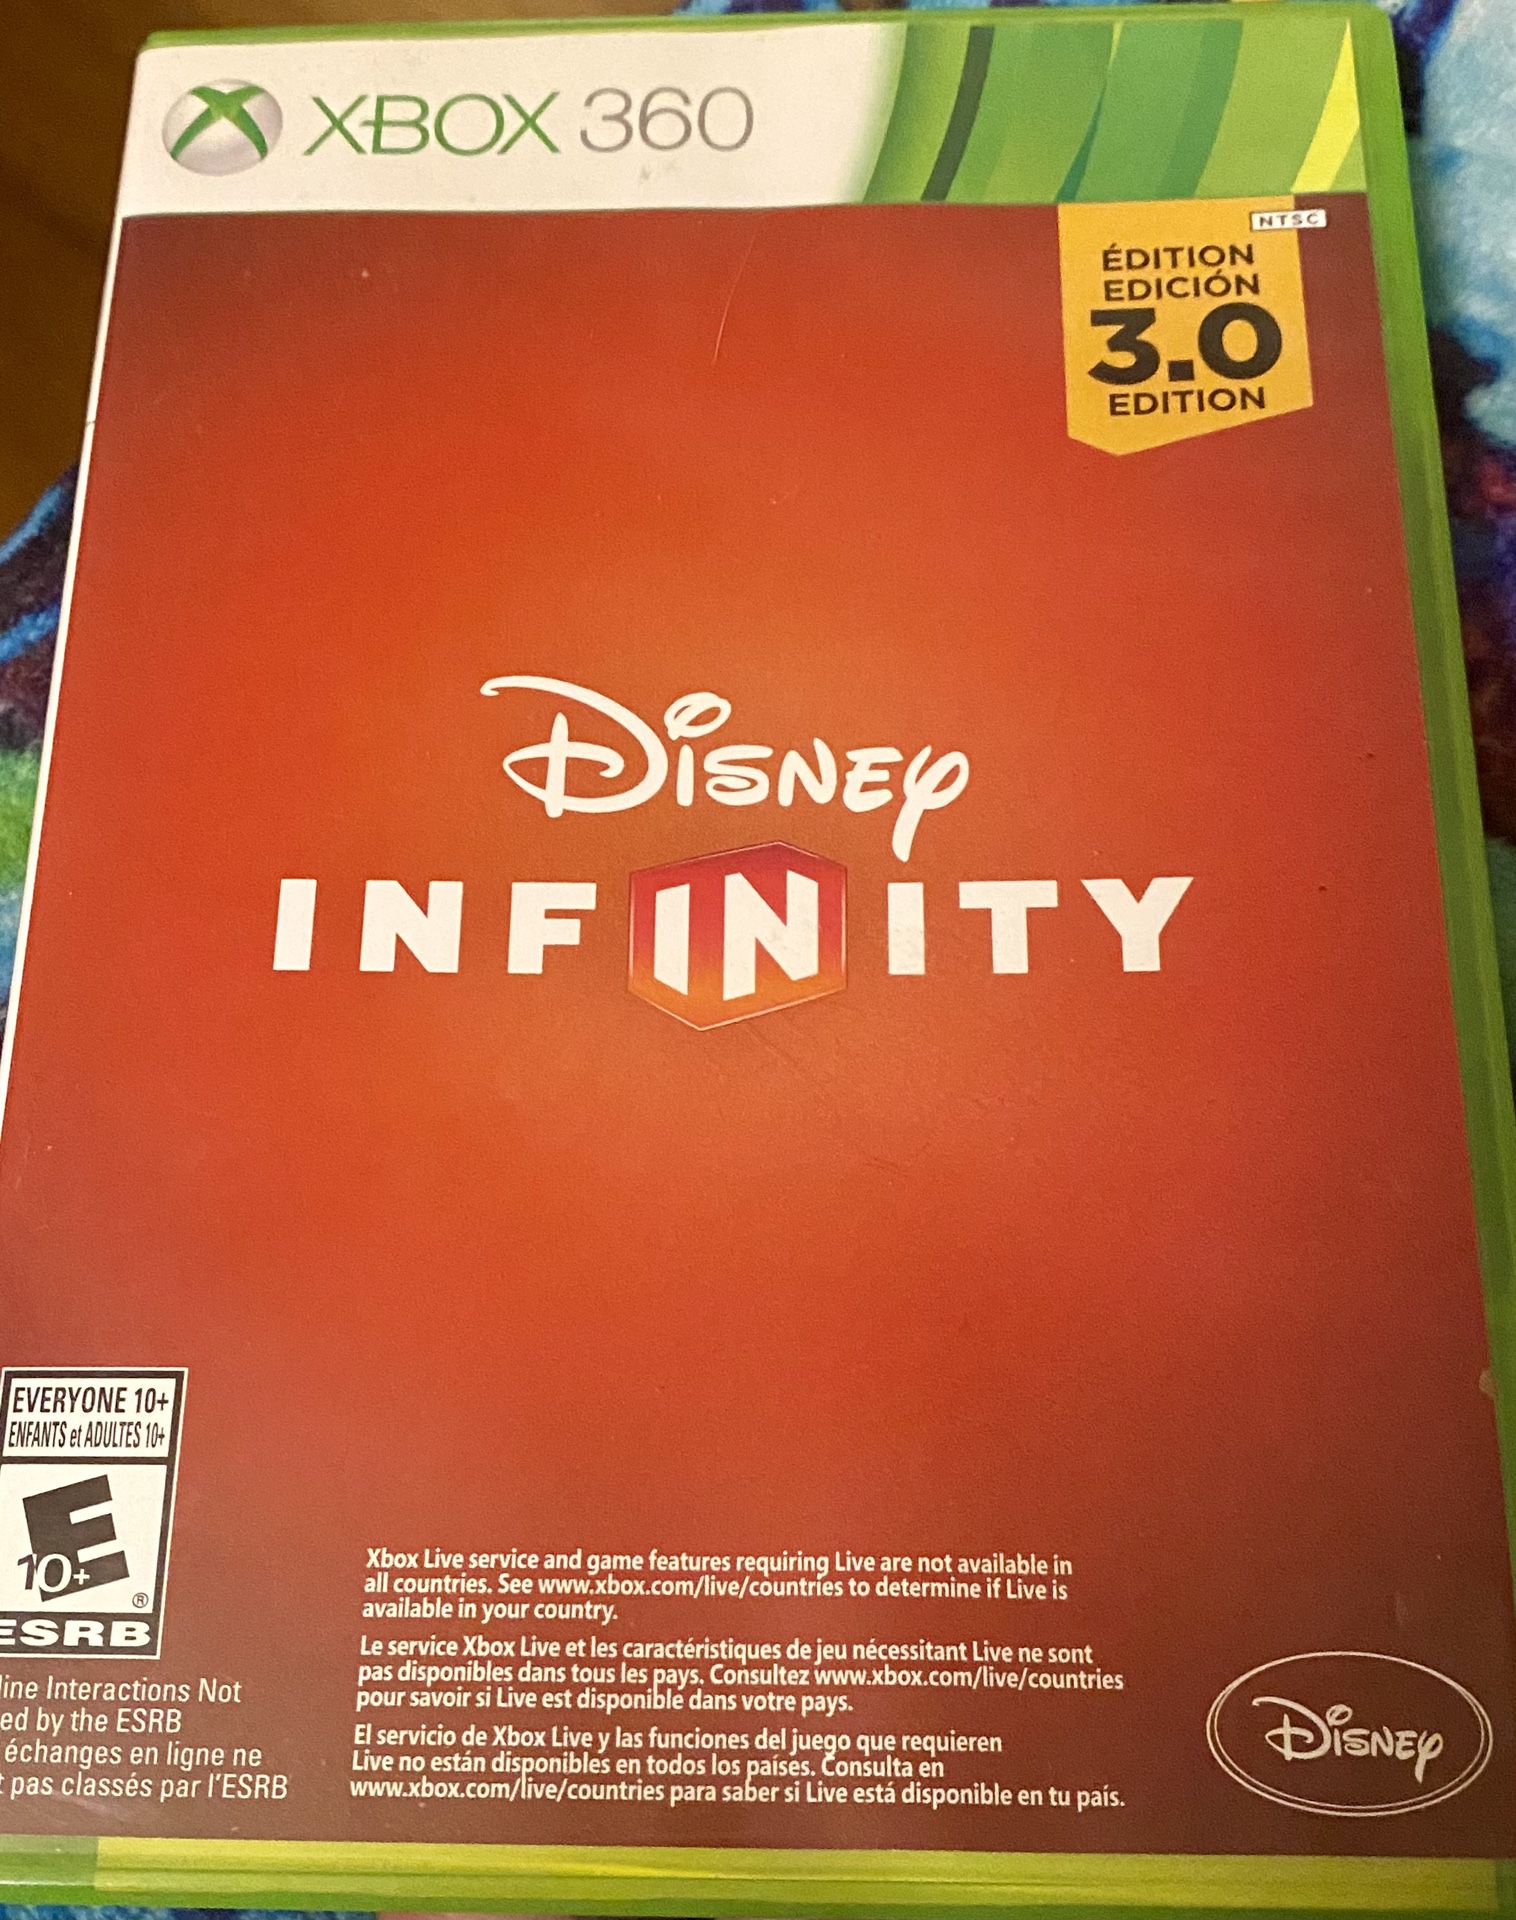 Disney Infinity 3.0 Edition for Xbox 360